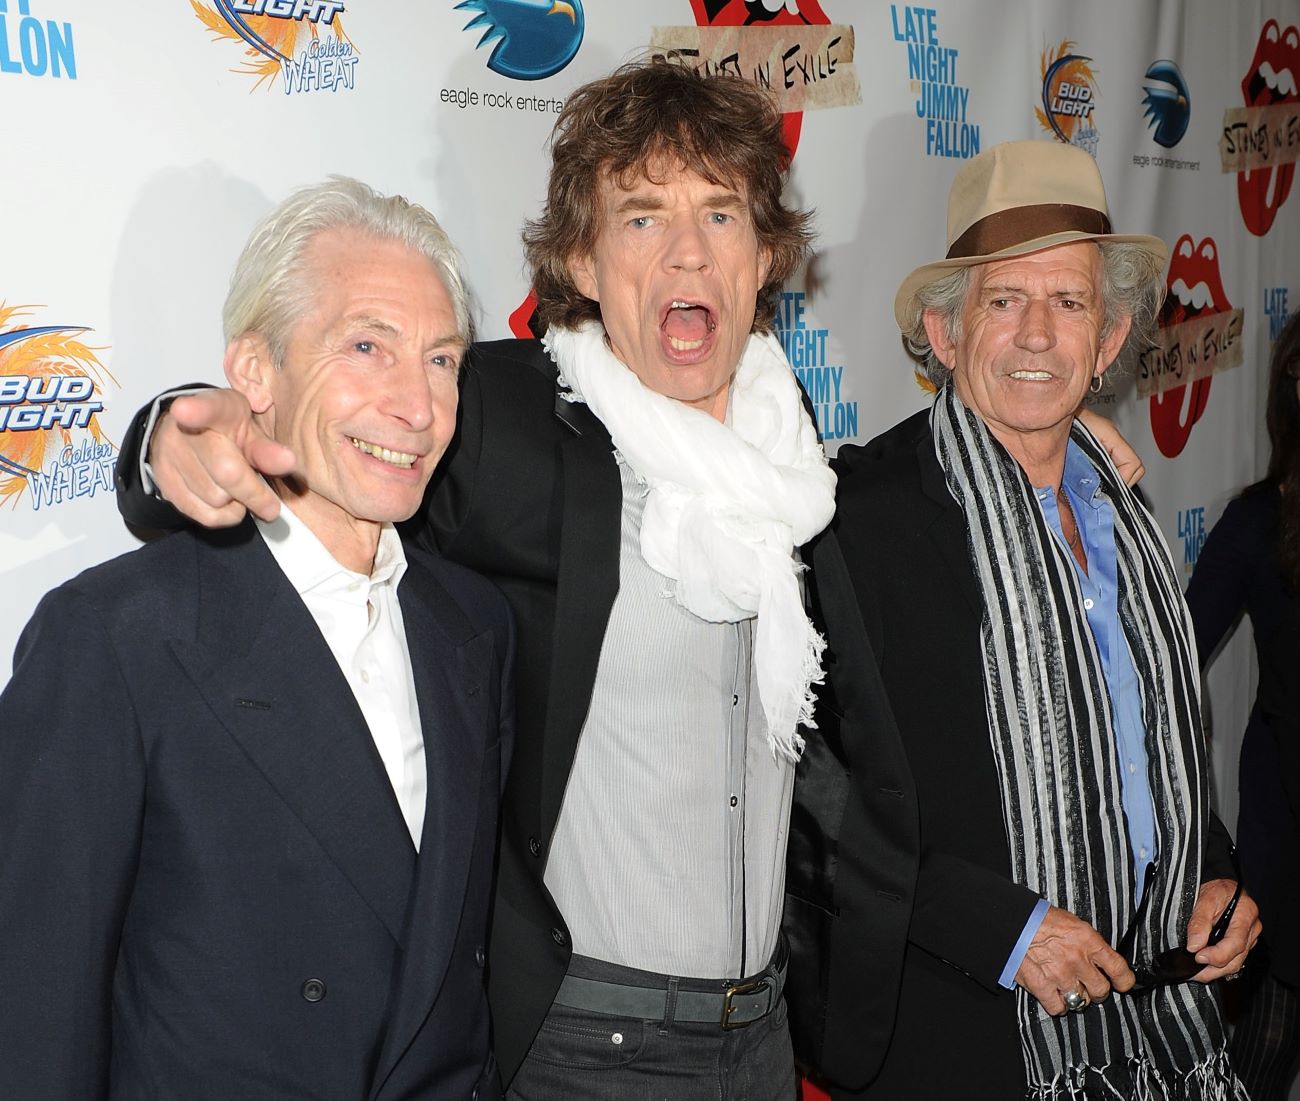 Charlie Watts, Mick Jagger, and Keith Richards pose together. Jagger puts his arms around his bandmates' shoulders.